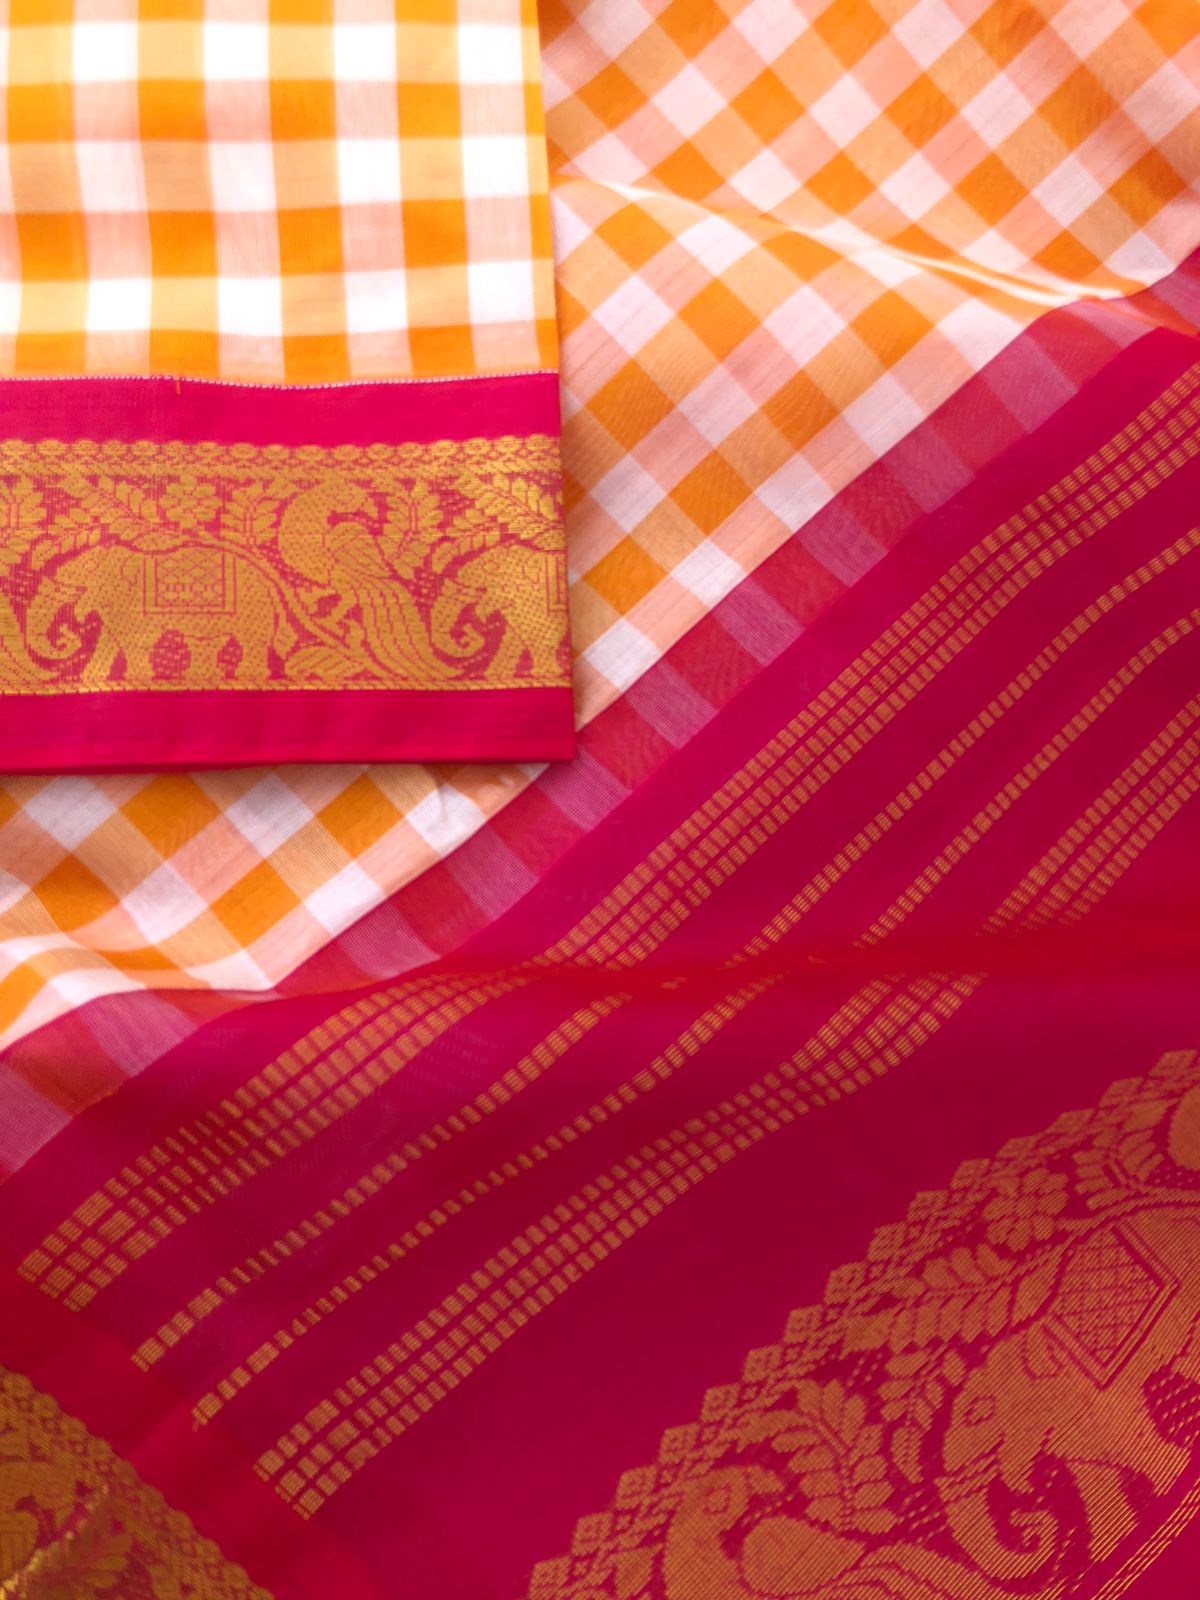 Paalum palamum kattam on Korvai Silk Cotton - off white and orange chexs with pink borders pallu and blouse